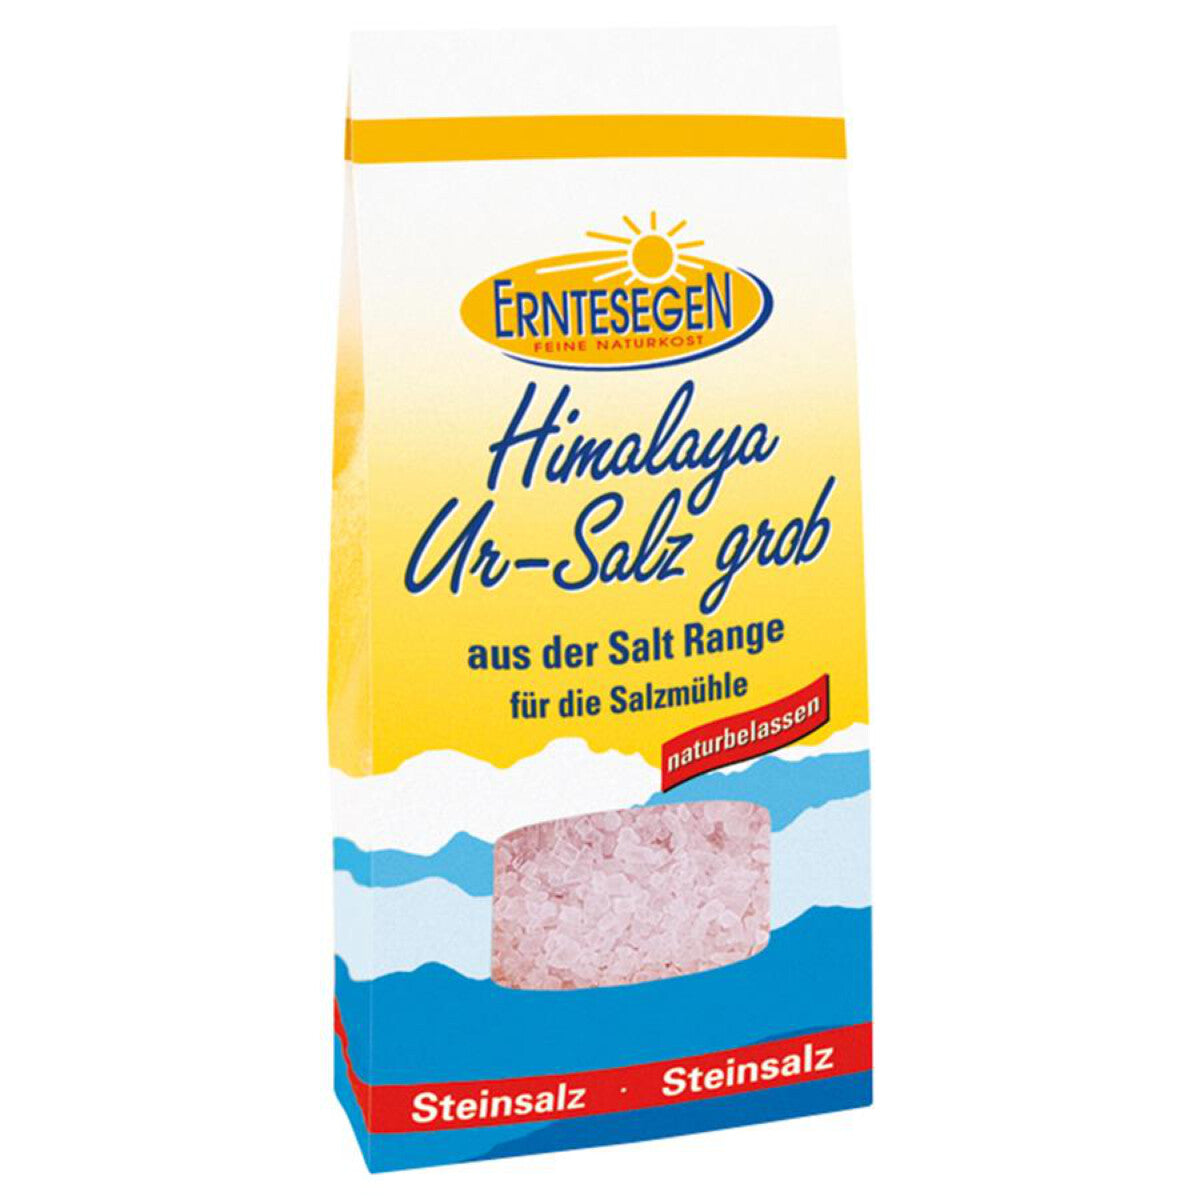 ERNTESEGEN Himalaya Ur-Salz, grob - 300 g